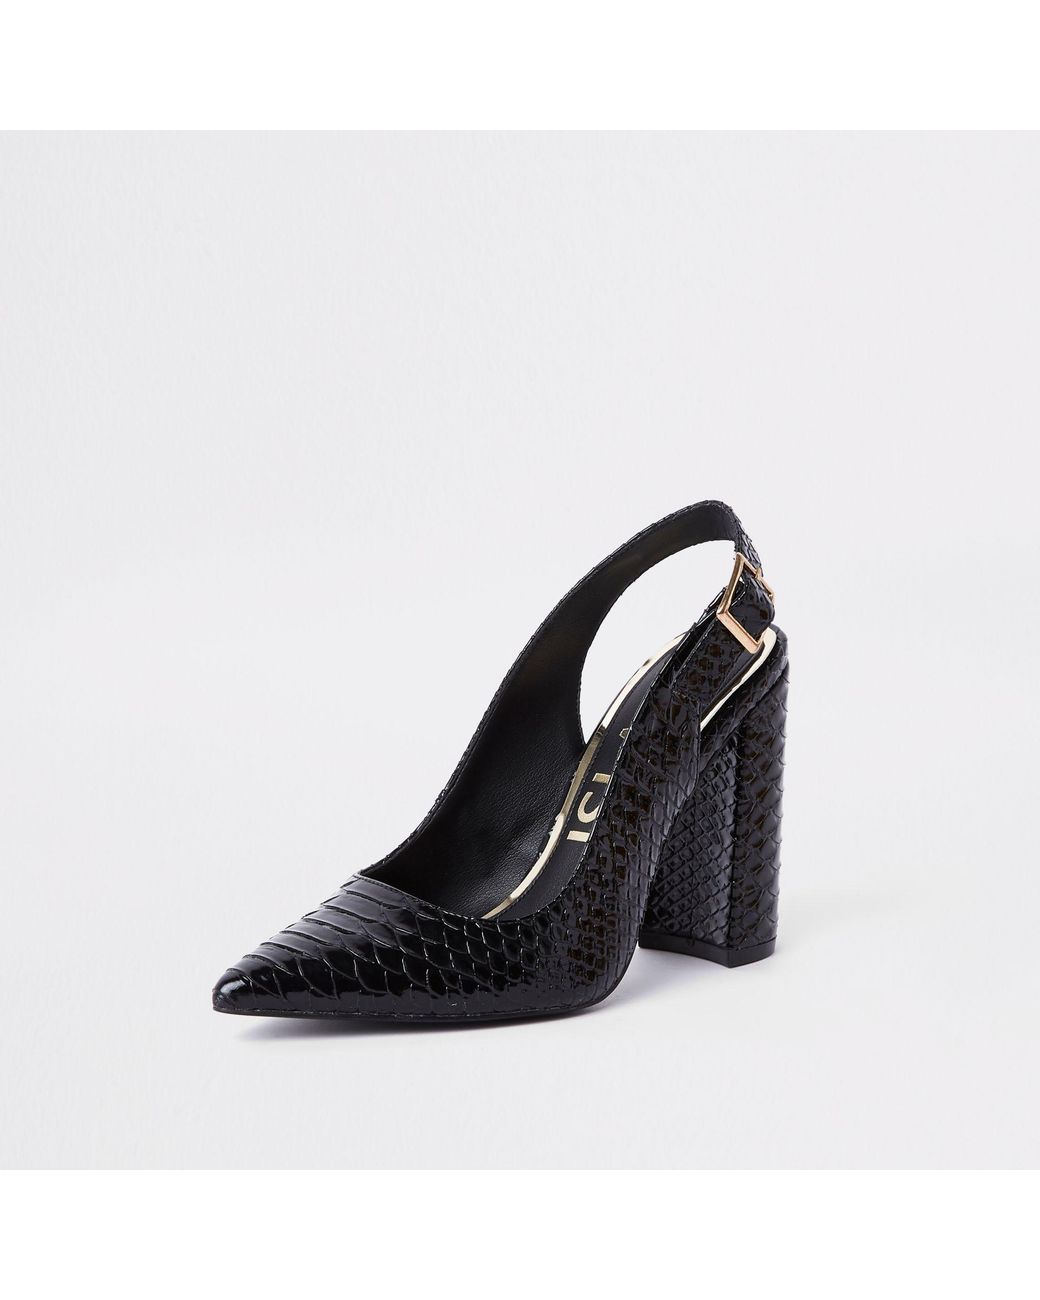 River Island Croc Block Heel Sling Back Court Shoes in Black | Lyst